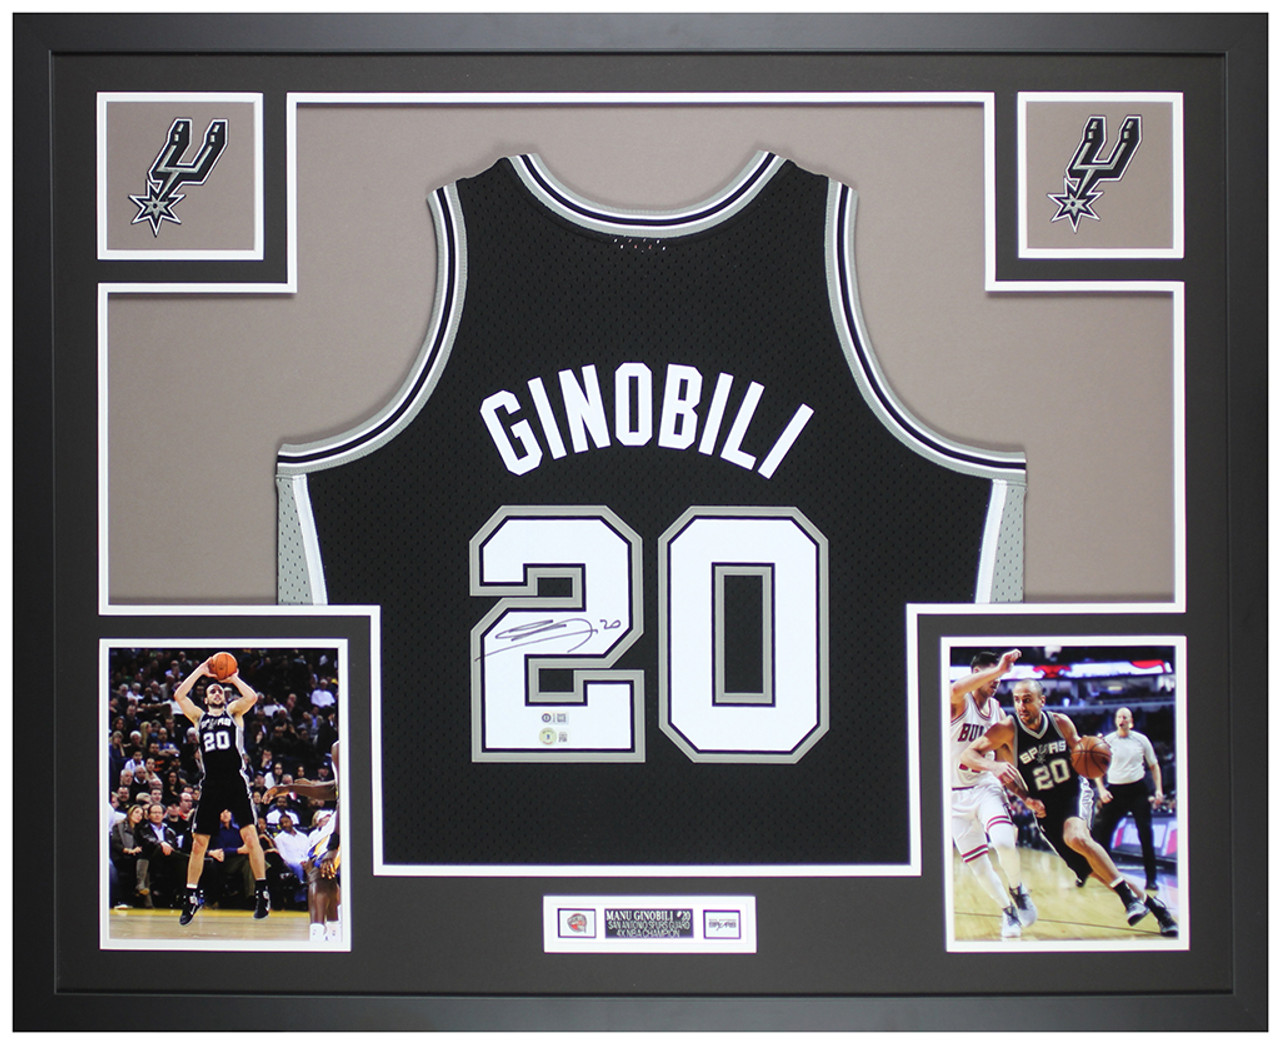 Emanuel Ginobili of the San Antonio Spurs draws contact on his way to